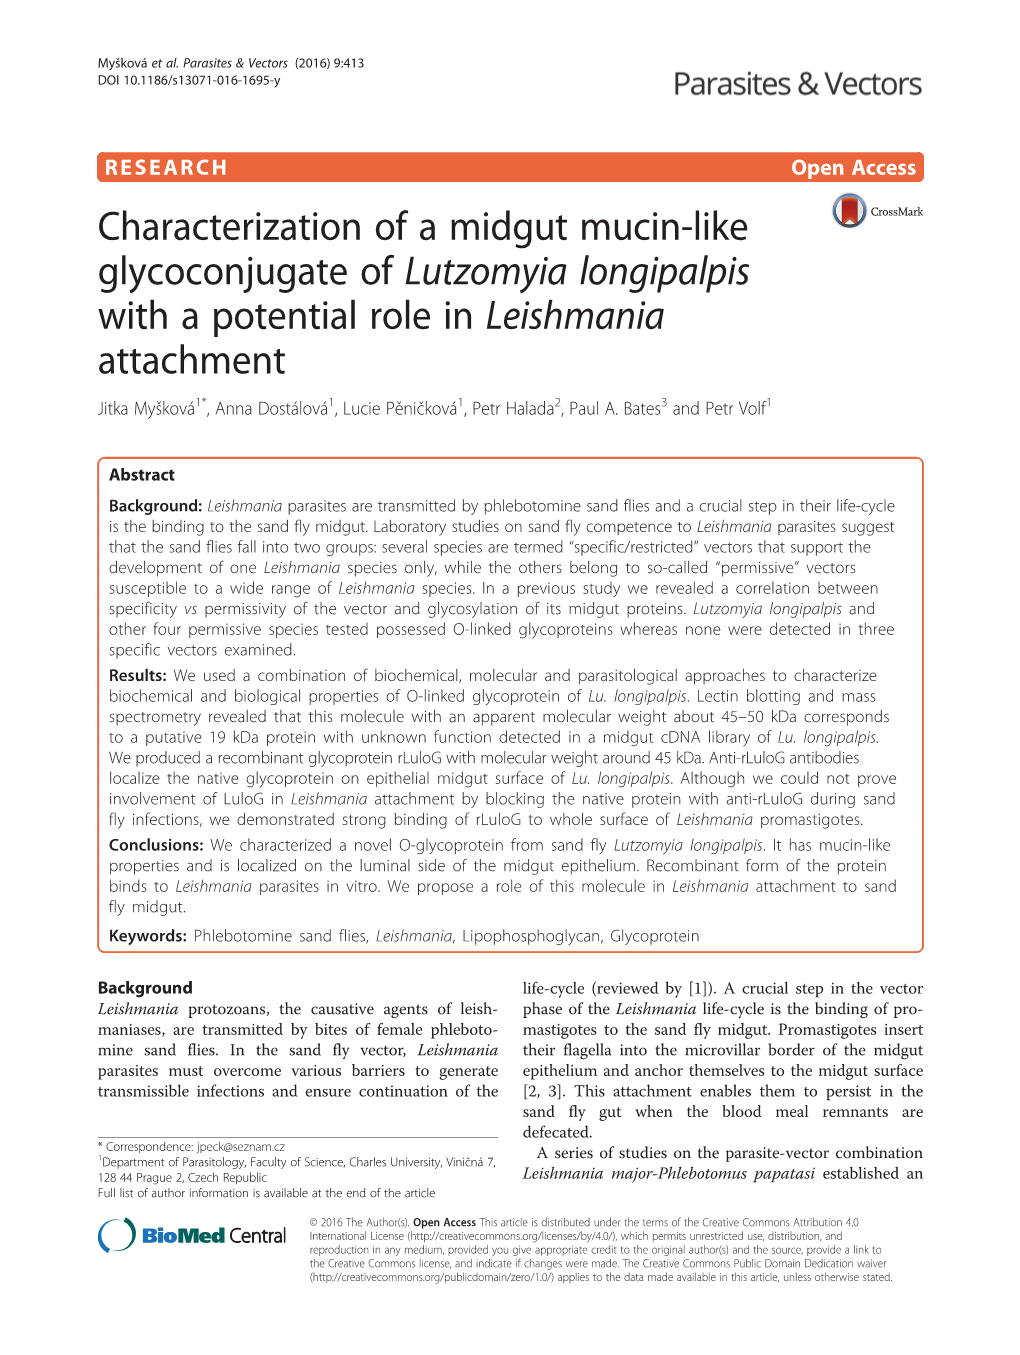 Characterization of a Midgut Mucin-Like Glycoconjugate Of